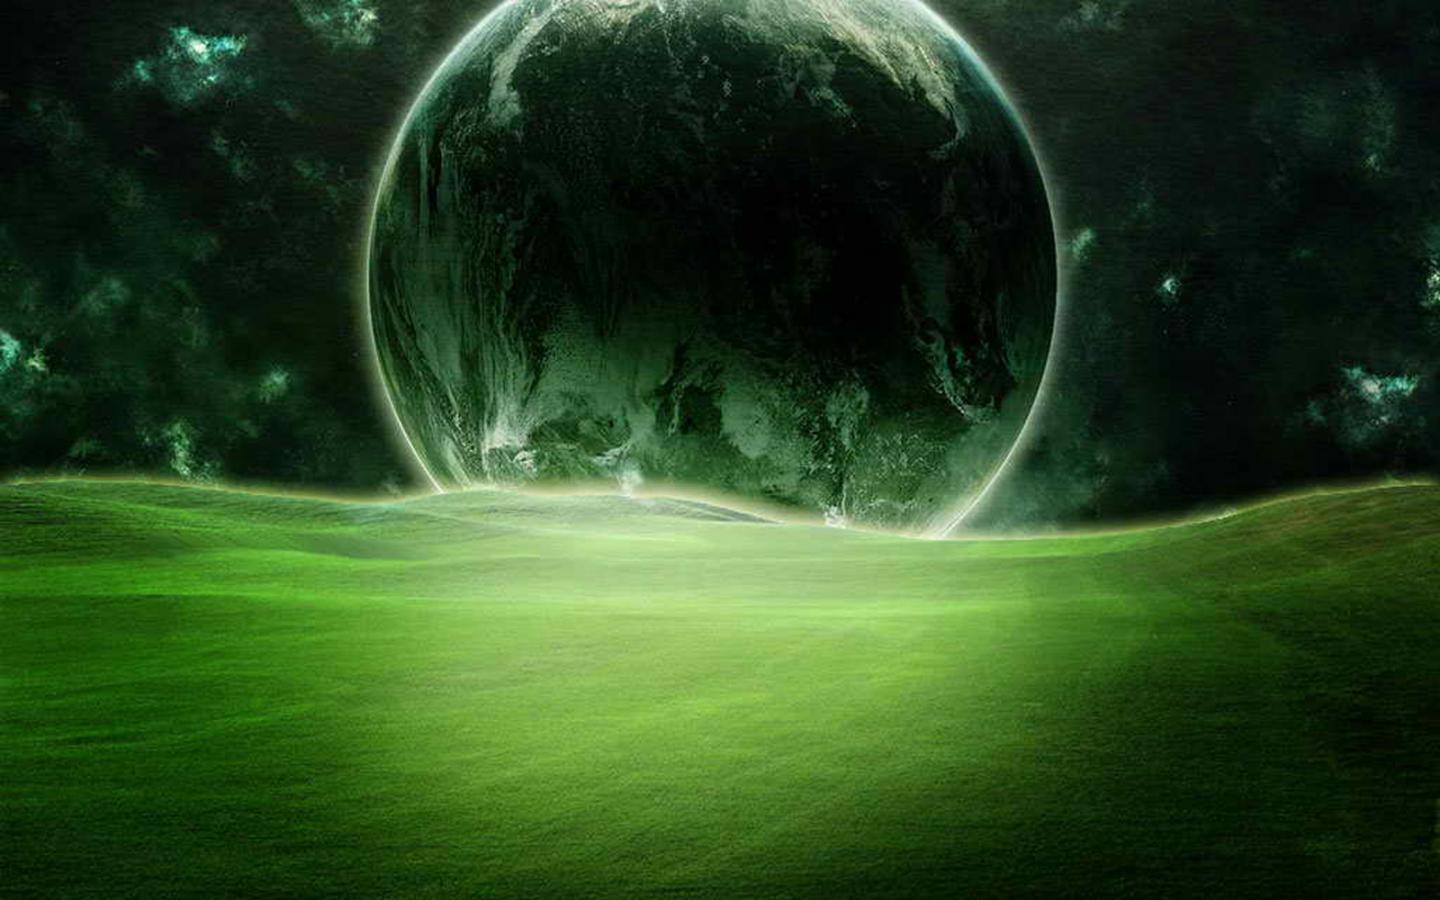 Green Planet (id: 50591)